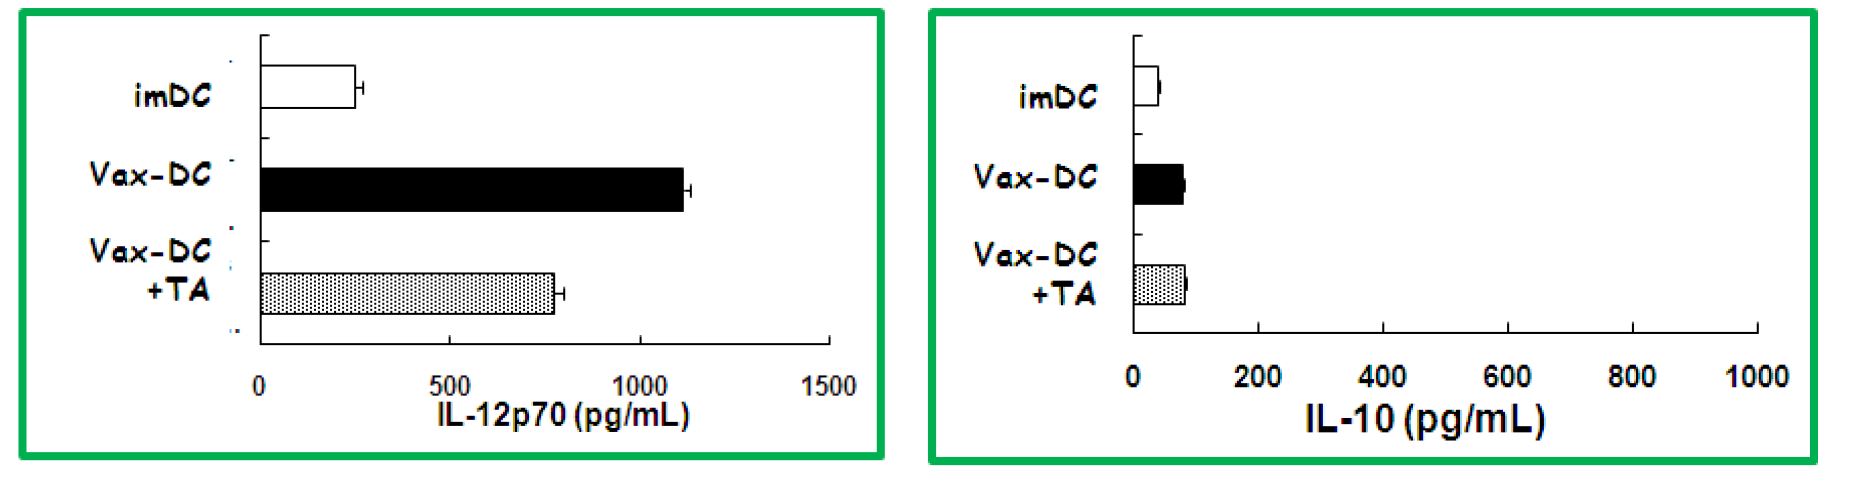 Vax-DC의 싸이토카인 생산능 비교실험